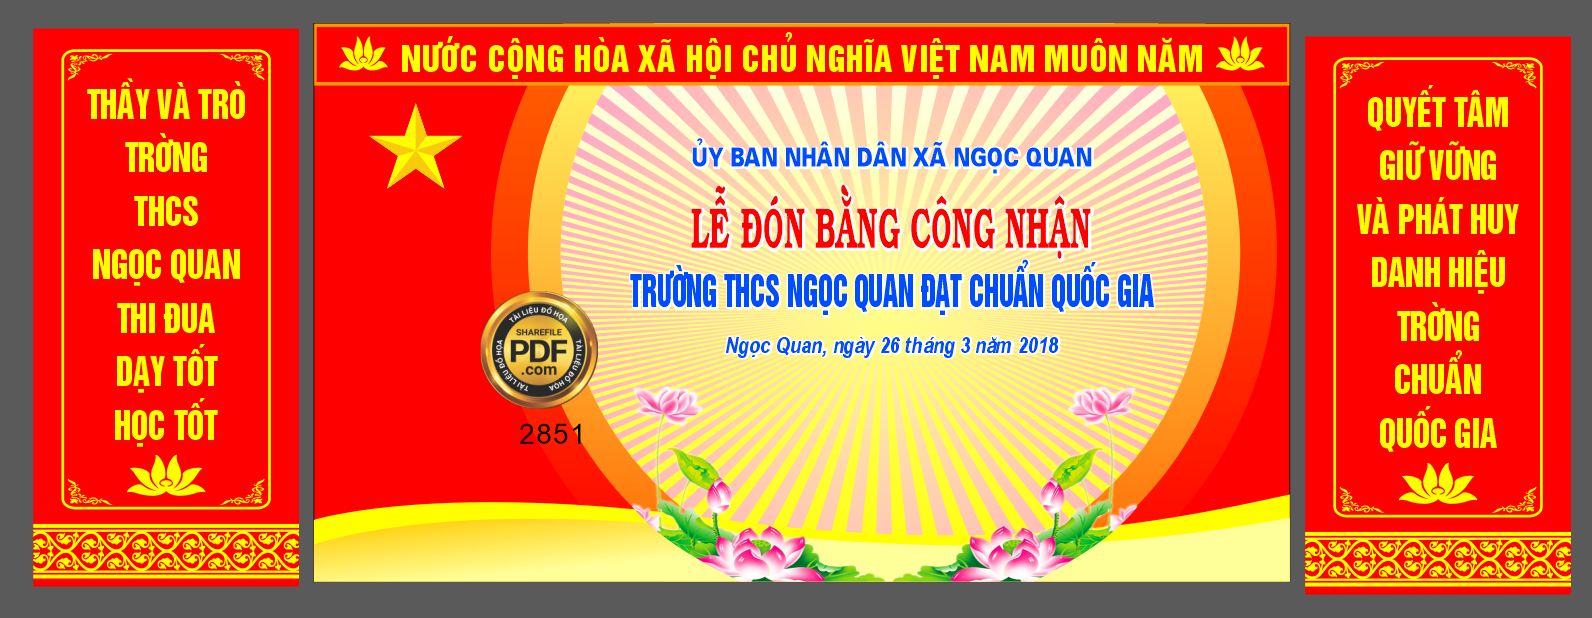 le don bang cong nhan truong thcs dat chuan quoc gia.png